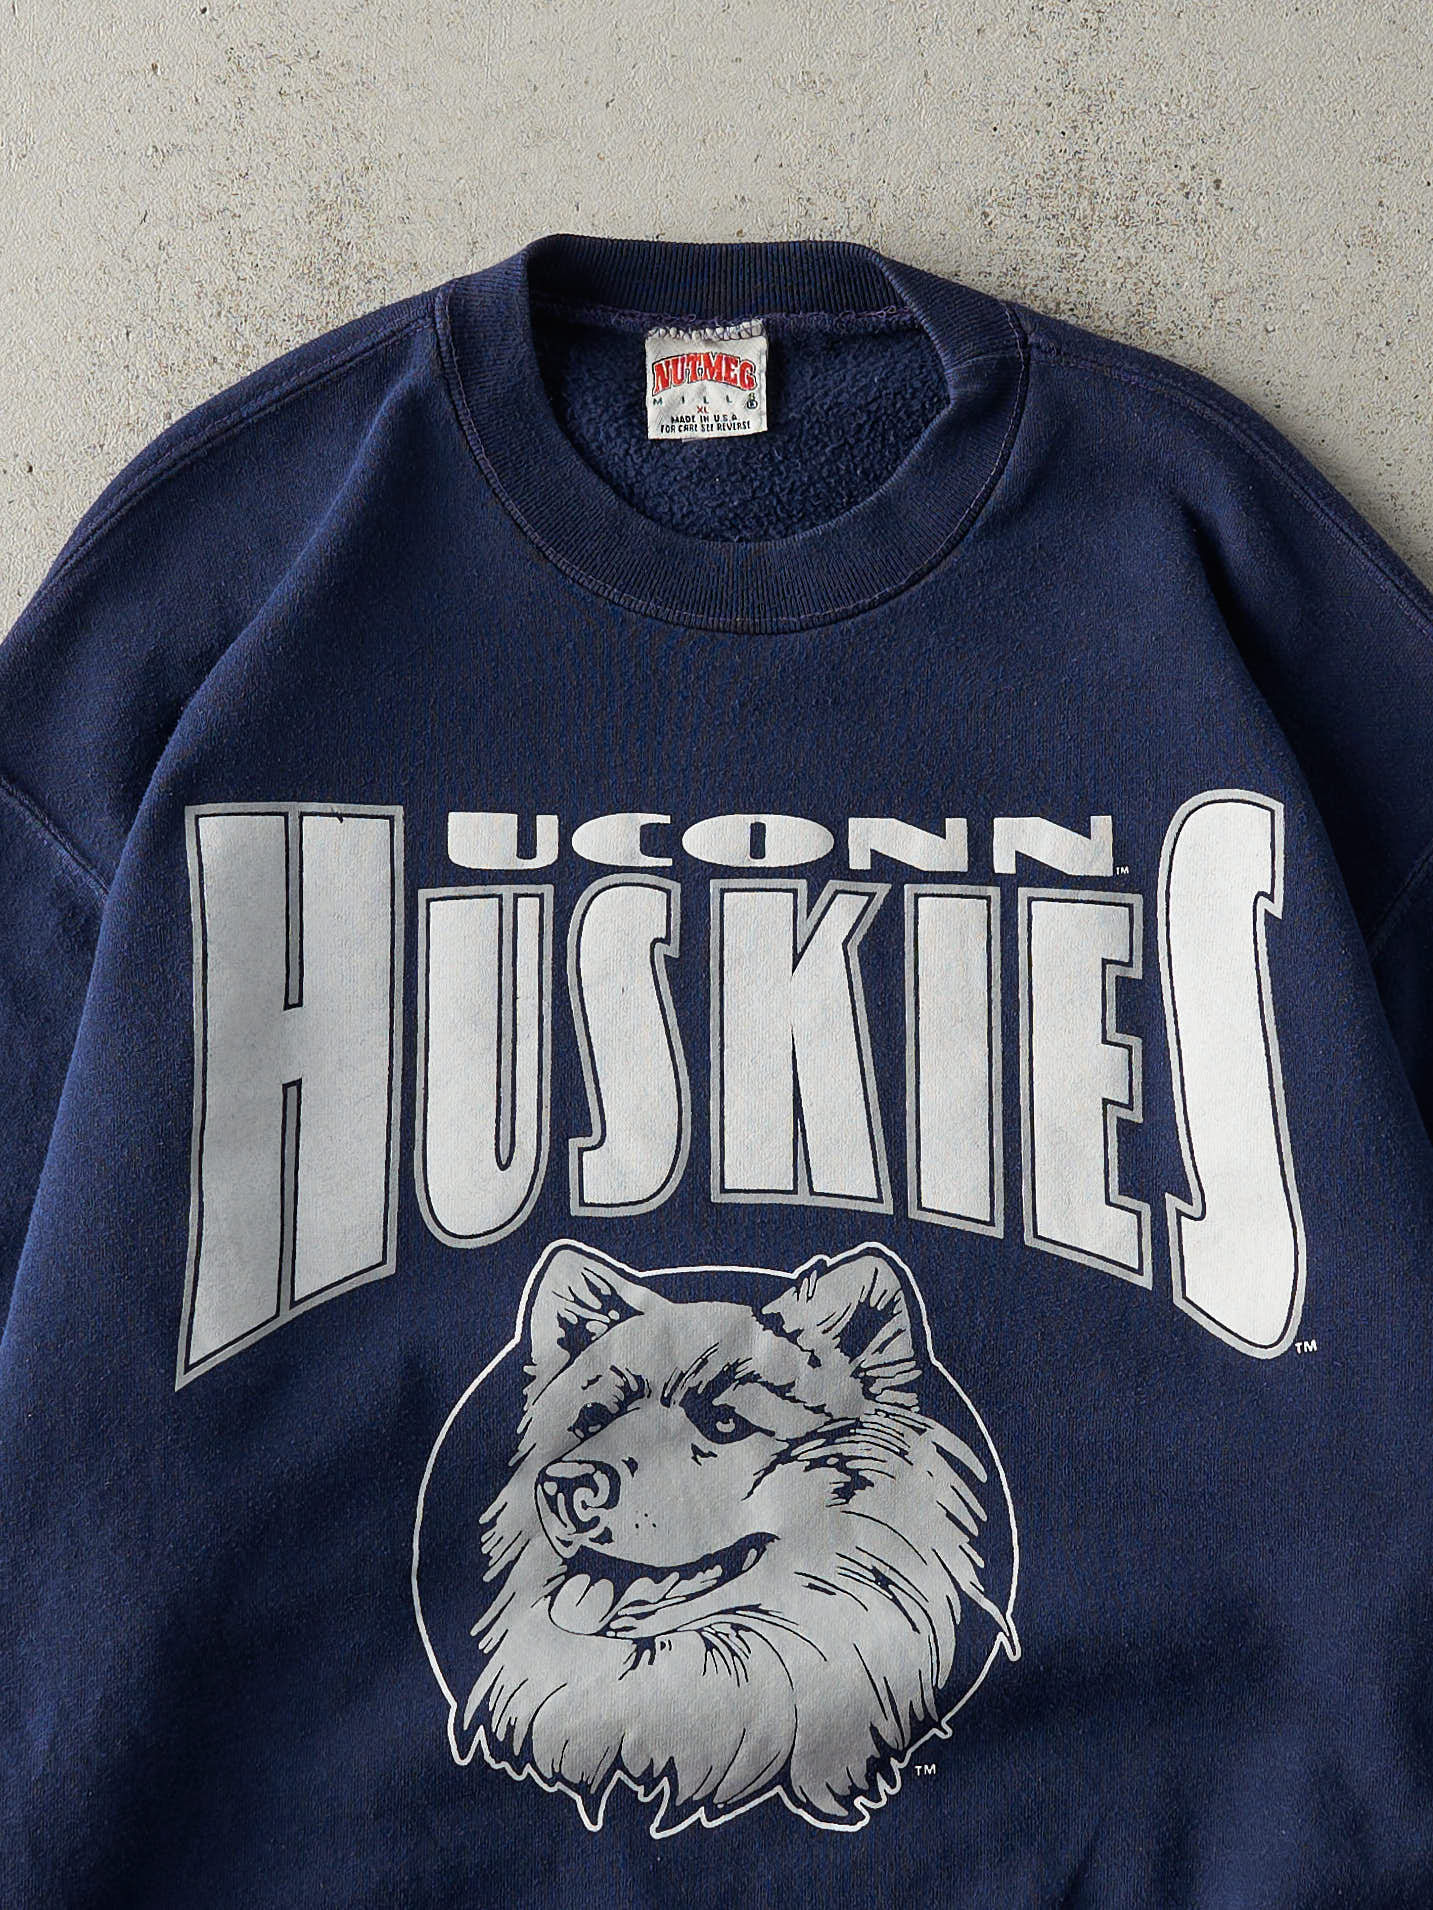 Vintage 90s Navy Blue University of Connecticut UConn Huskies Crewneck (L/XL)